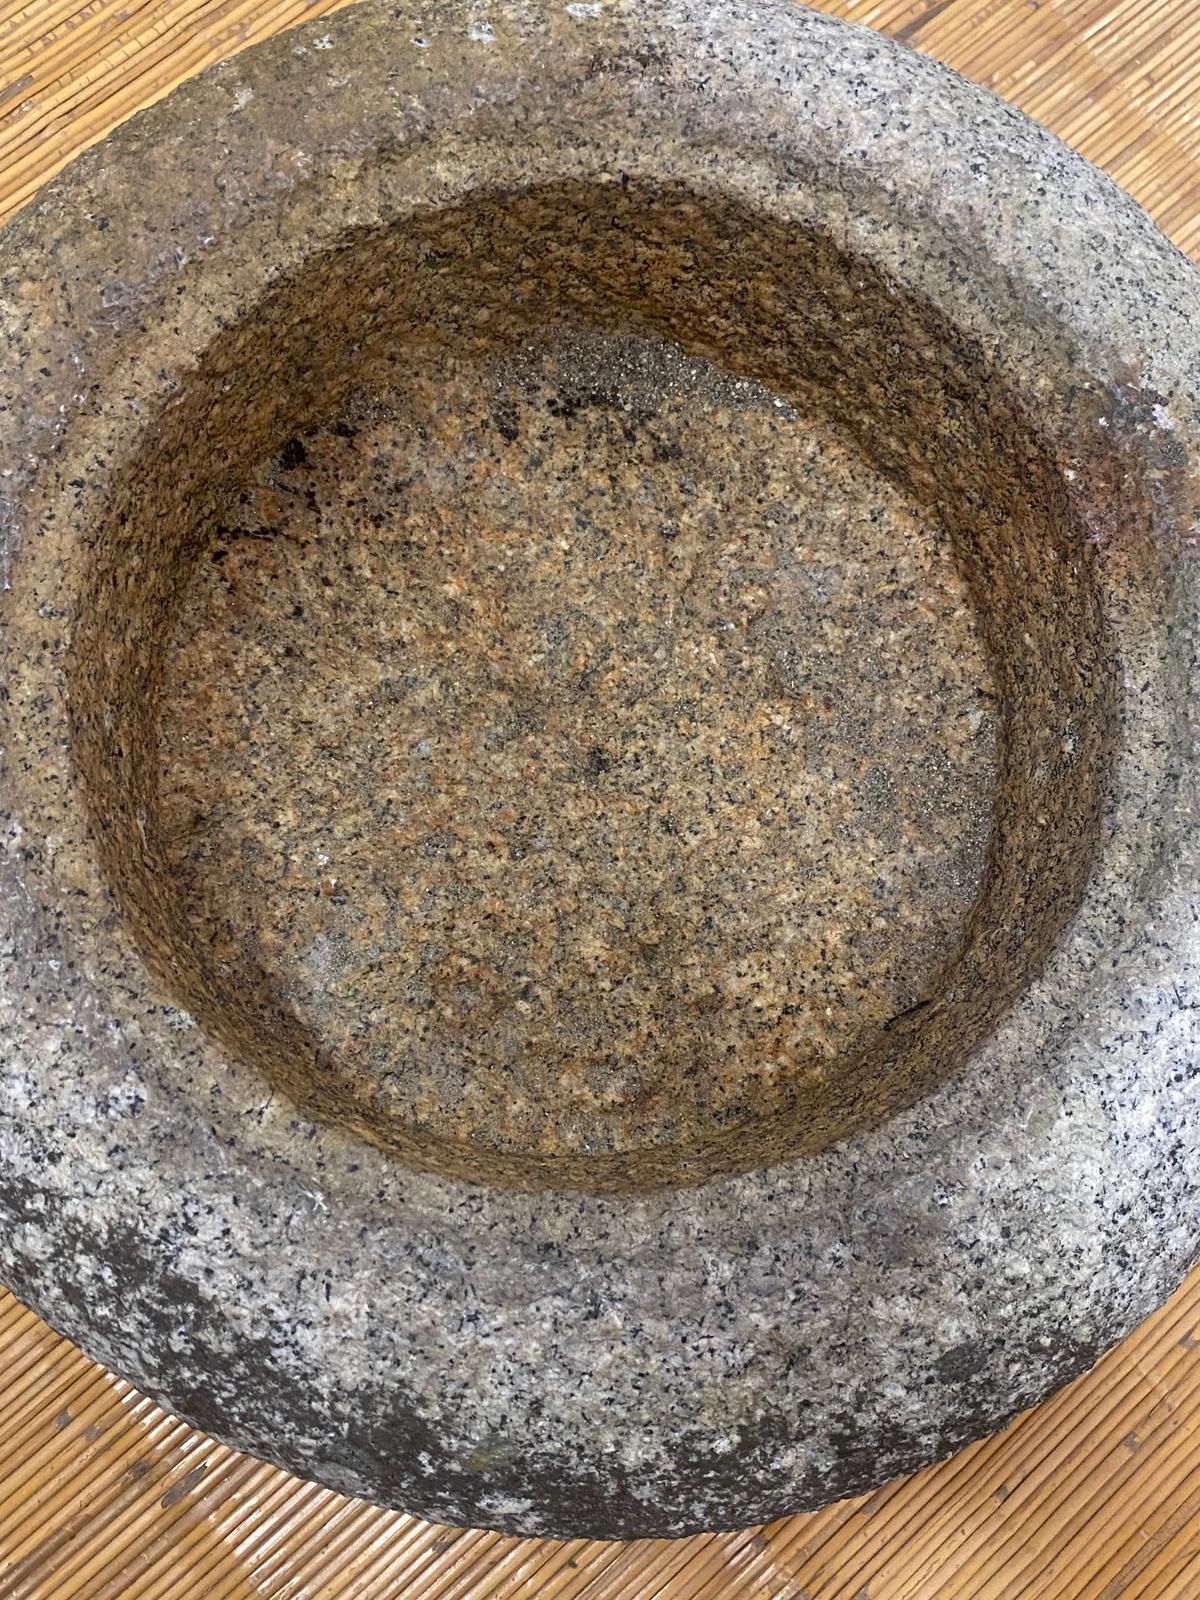 Hand-Crafted Tsukubai, A 19th century Japanese Granite Water Trough